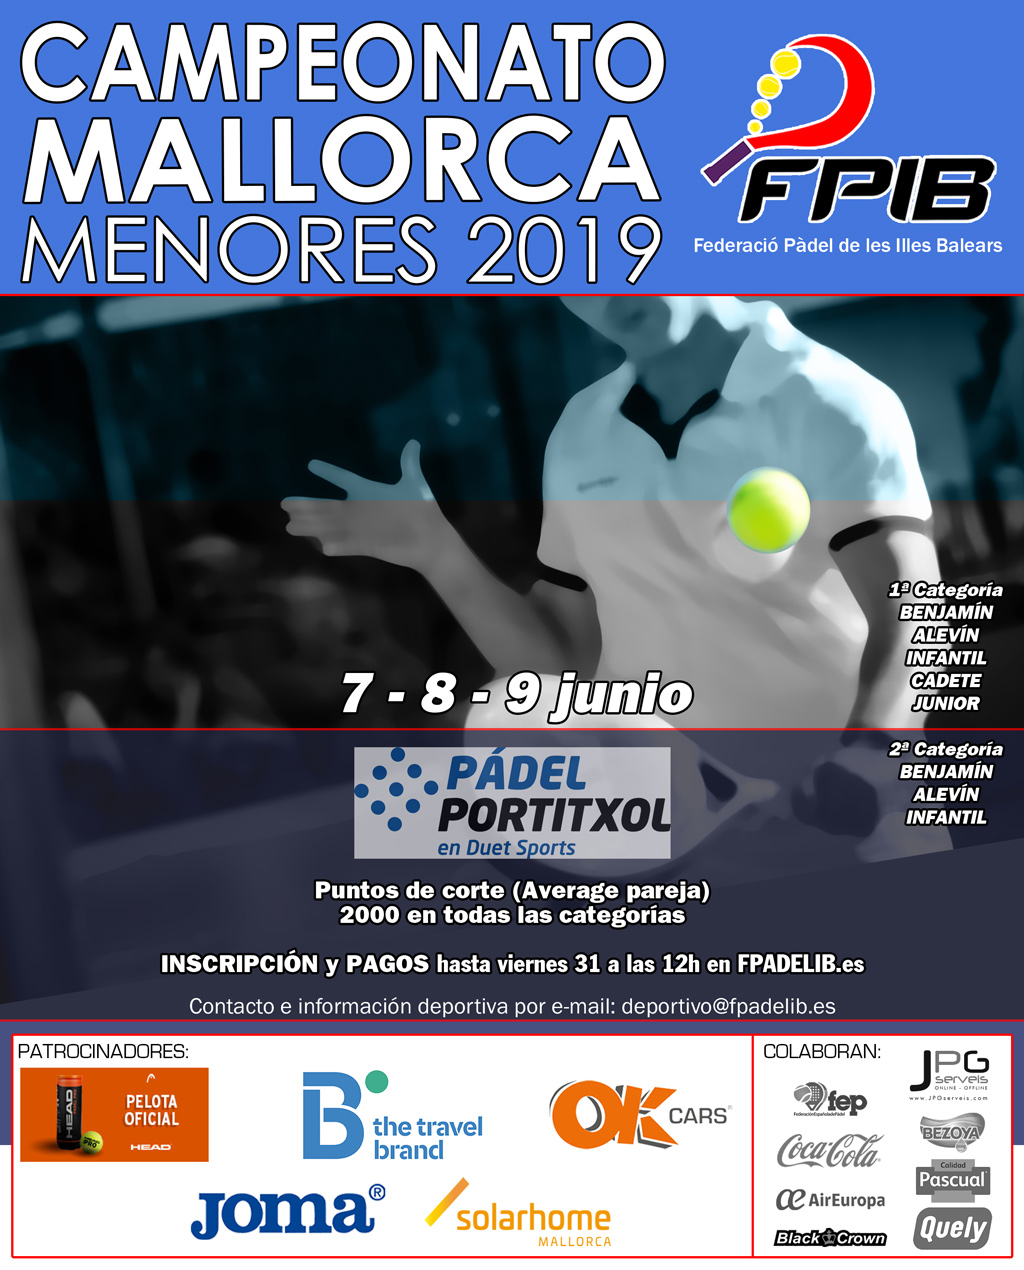 Campeonato Mallorca de menores 2019